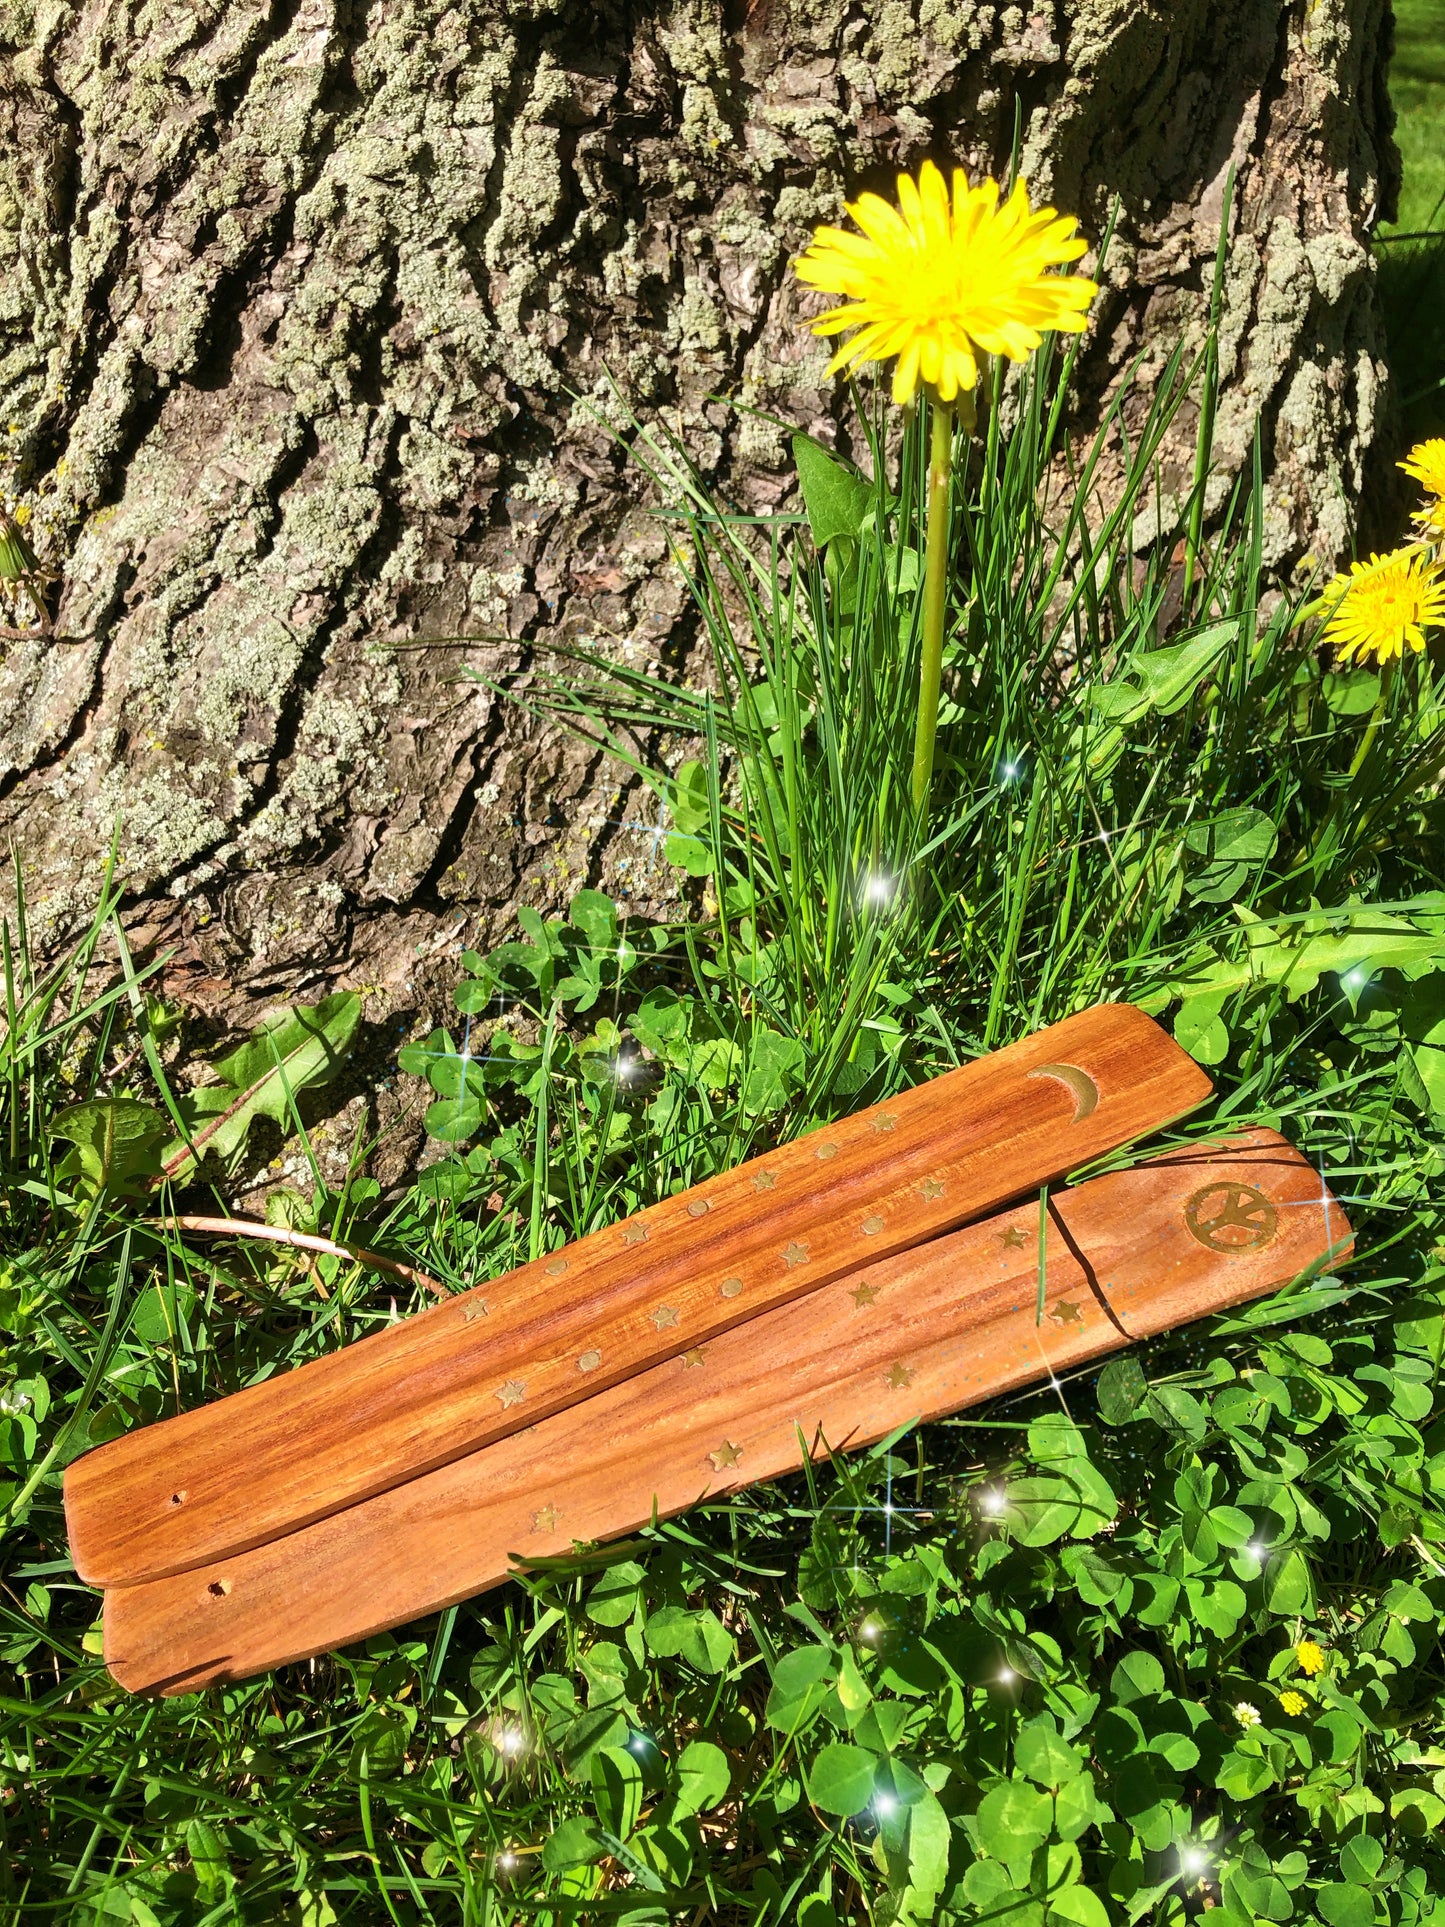 Wood Inlay Incense Stick Burner